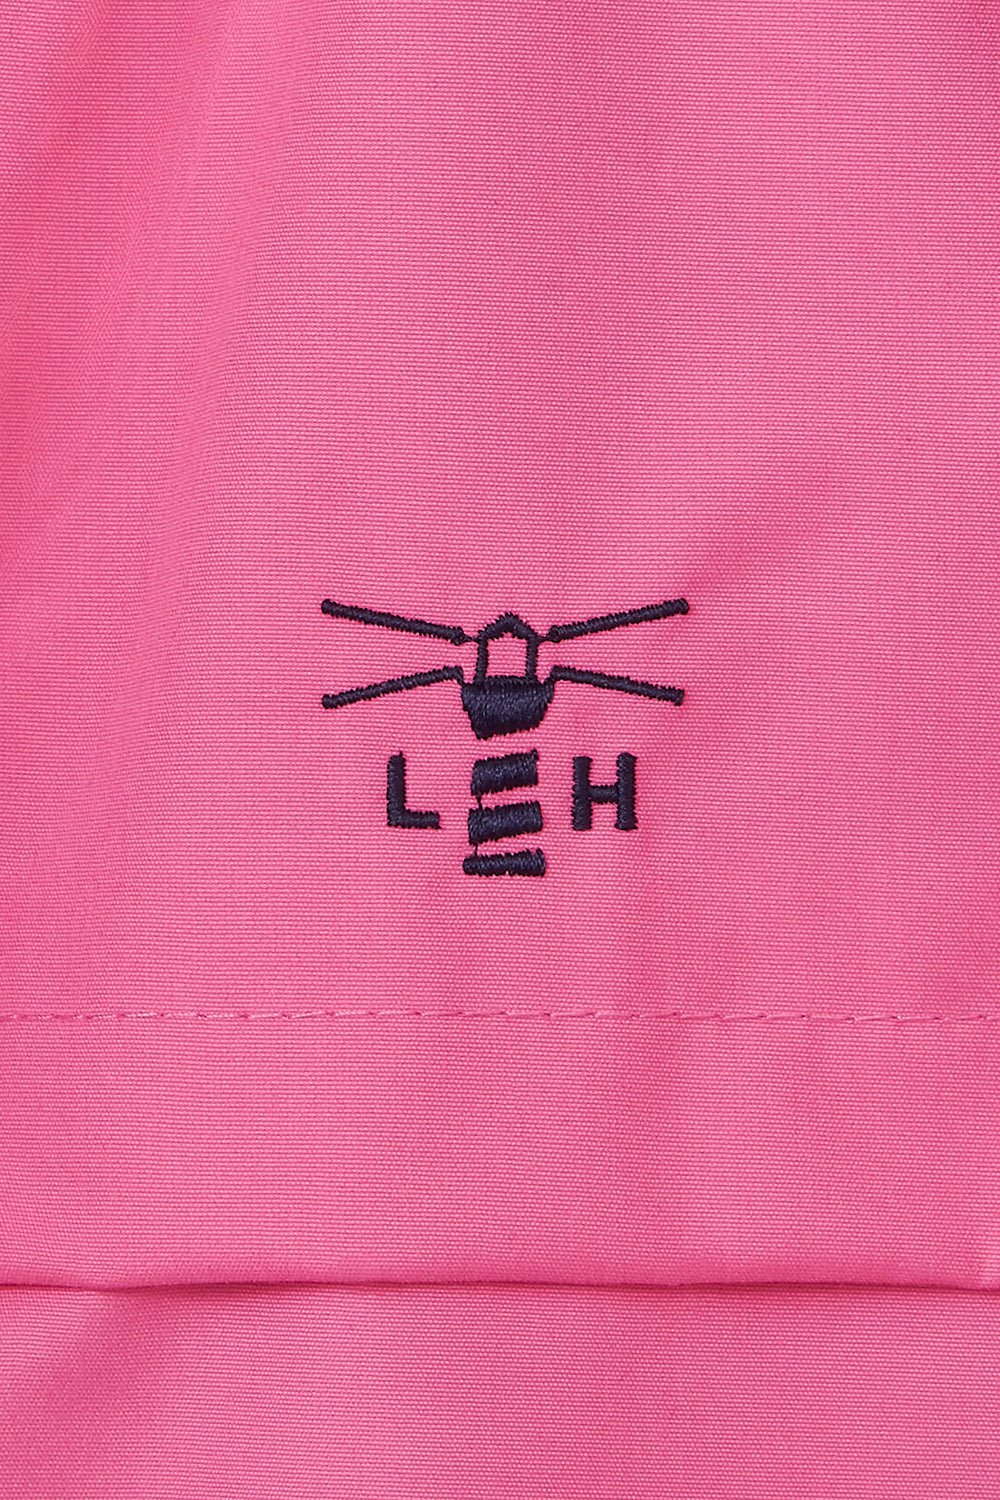 Beachcomber Jacket. Women's Lightweight Raincoat | Lighthouse